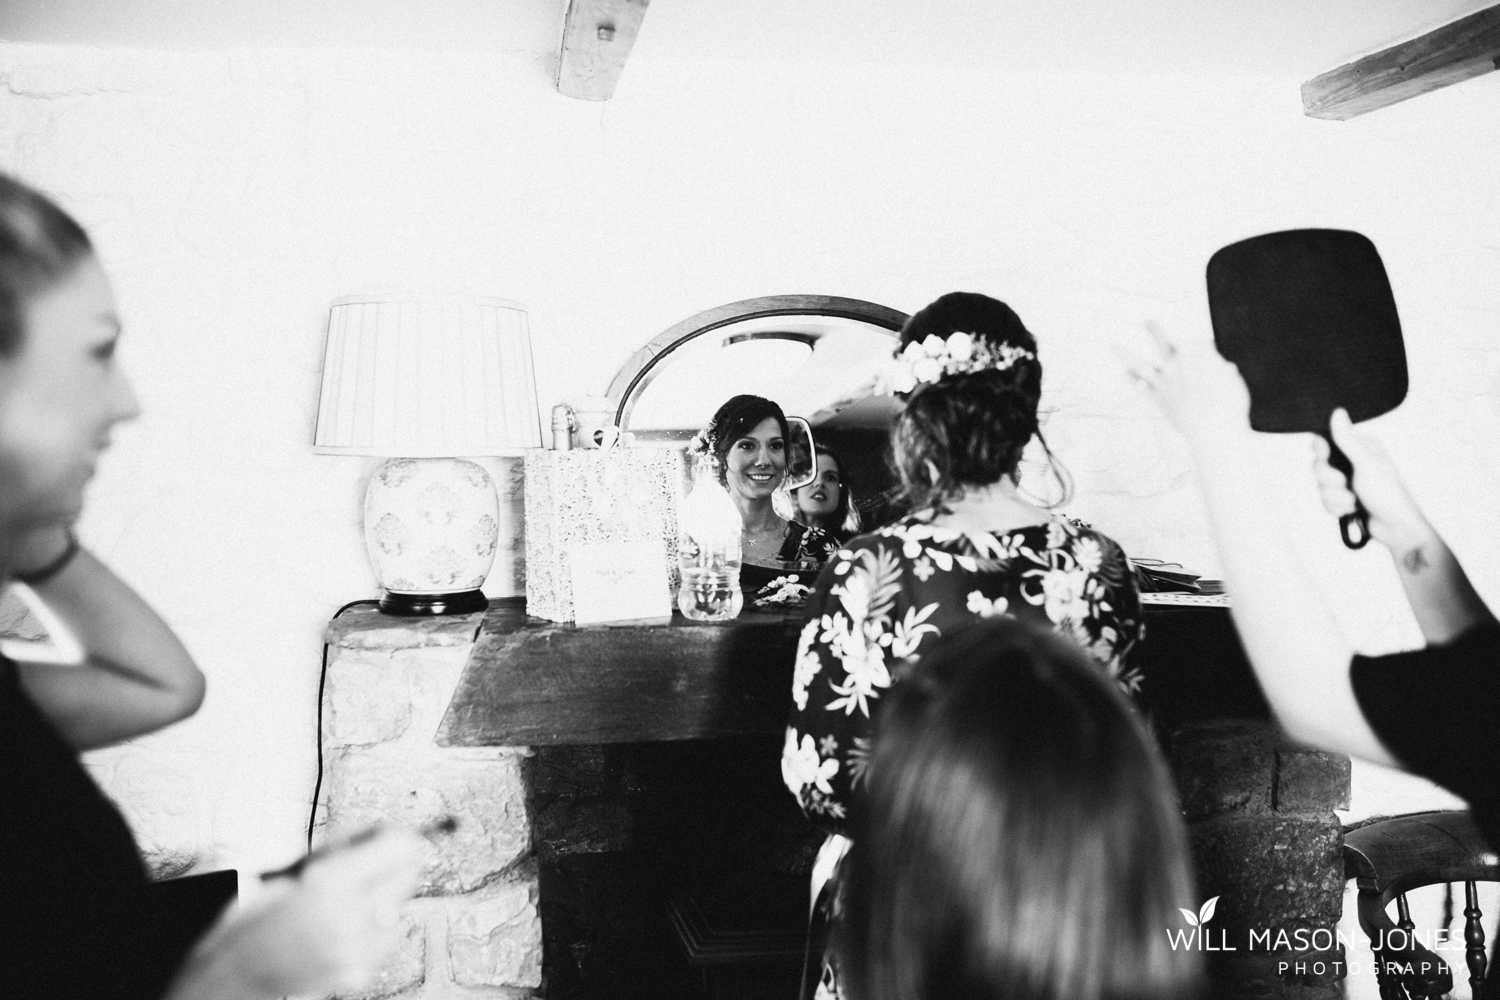  The king arthur hotel swansea wedding bridal preparations photography cottage bridesmaids 